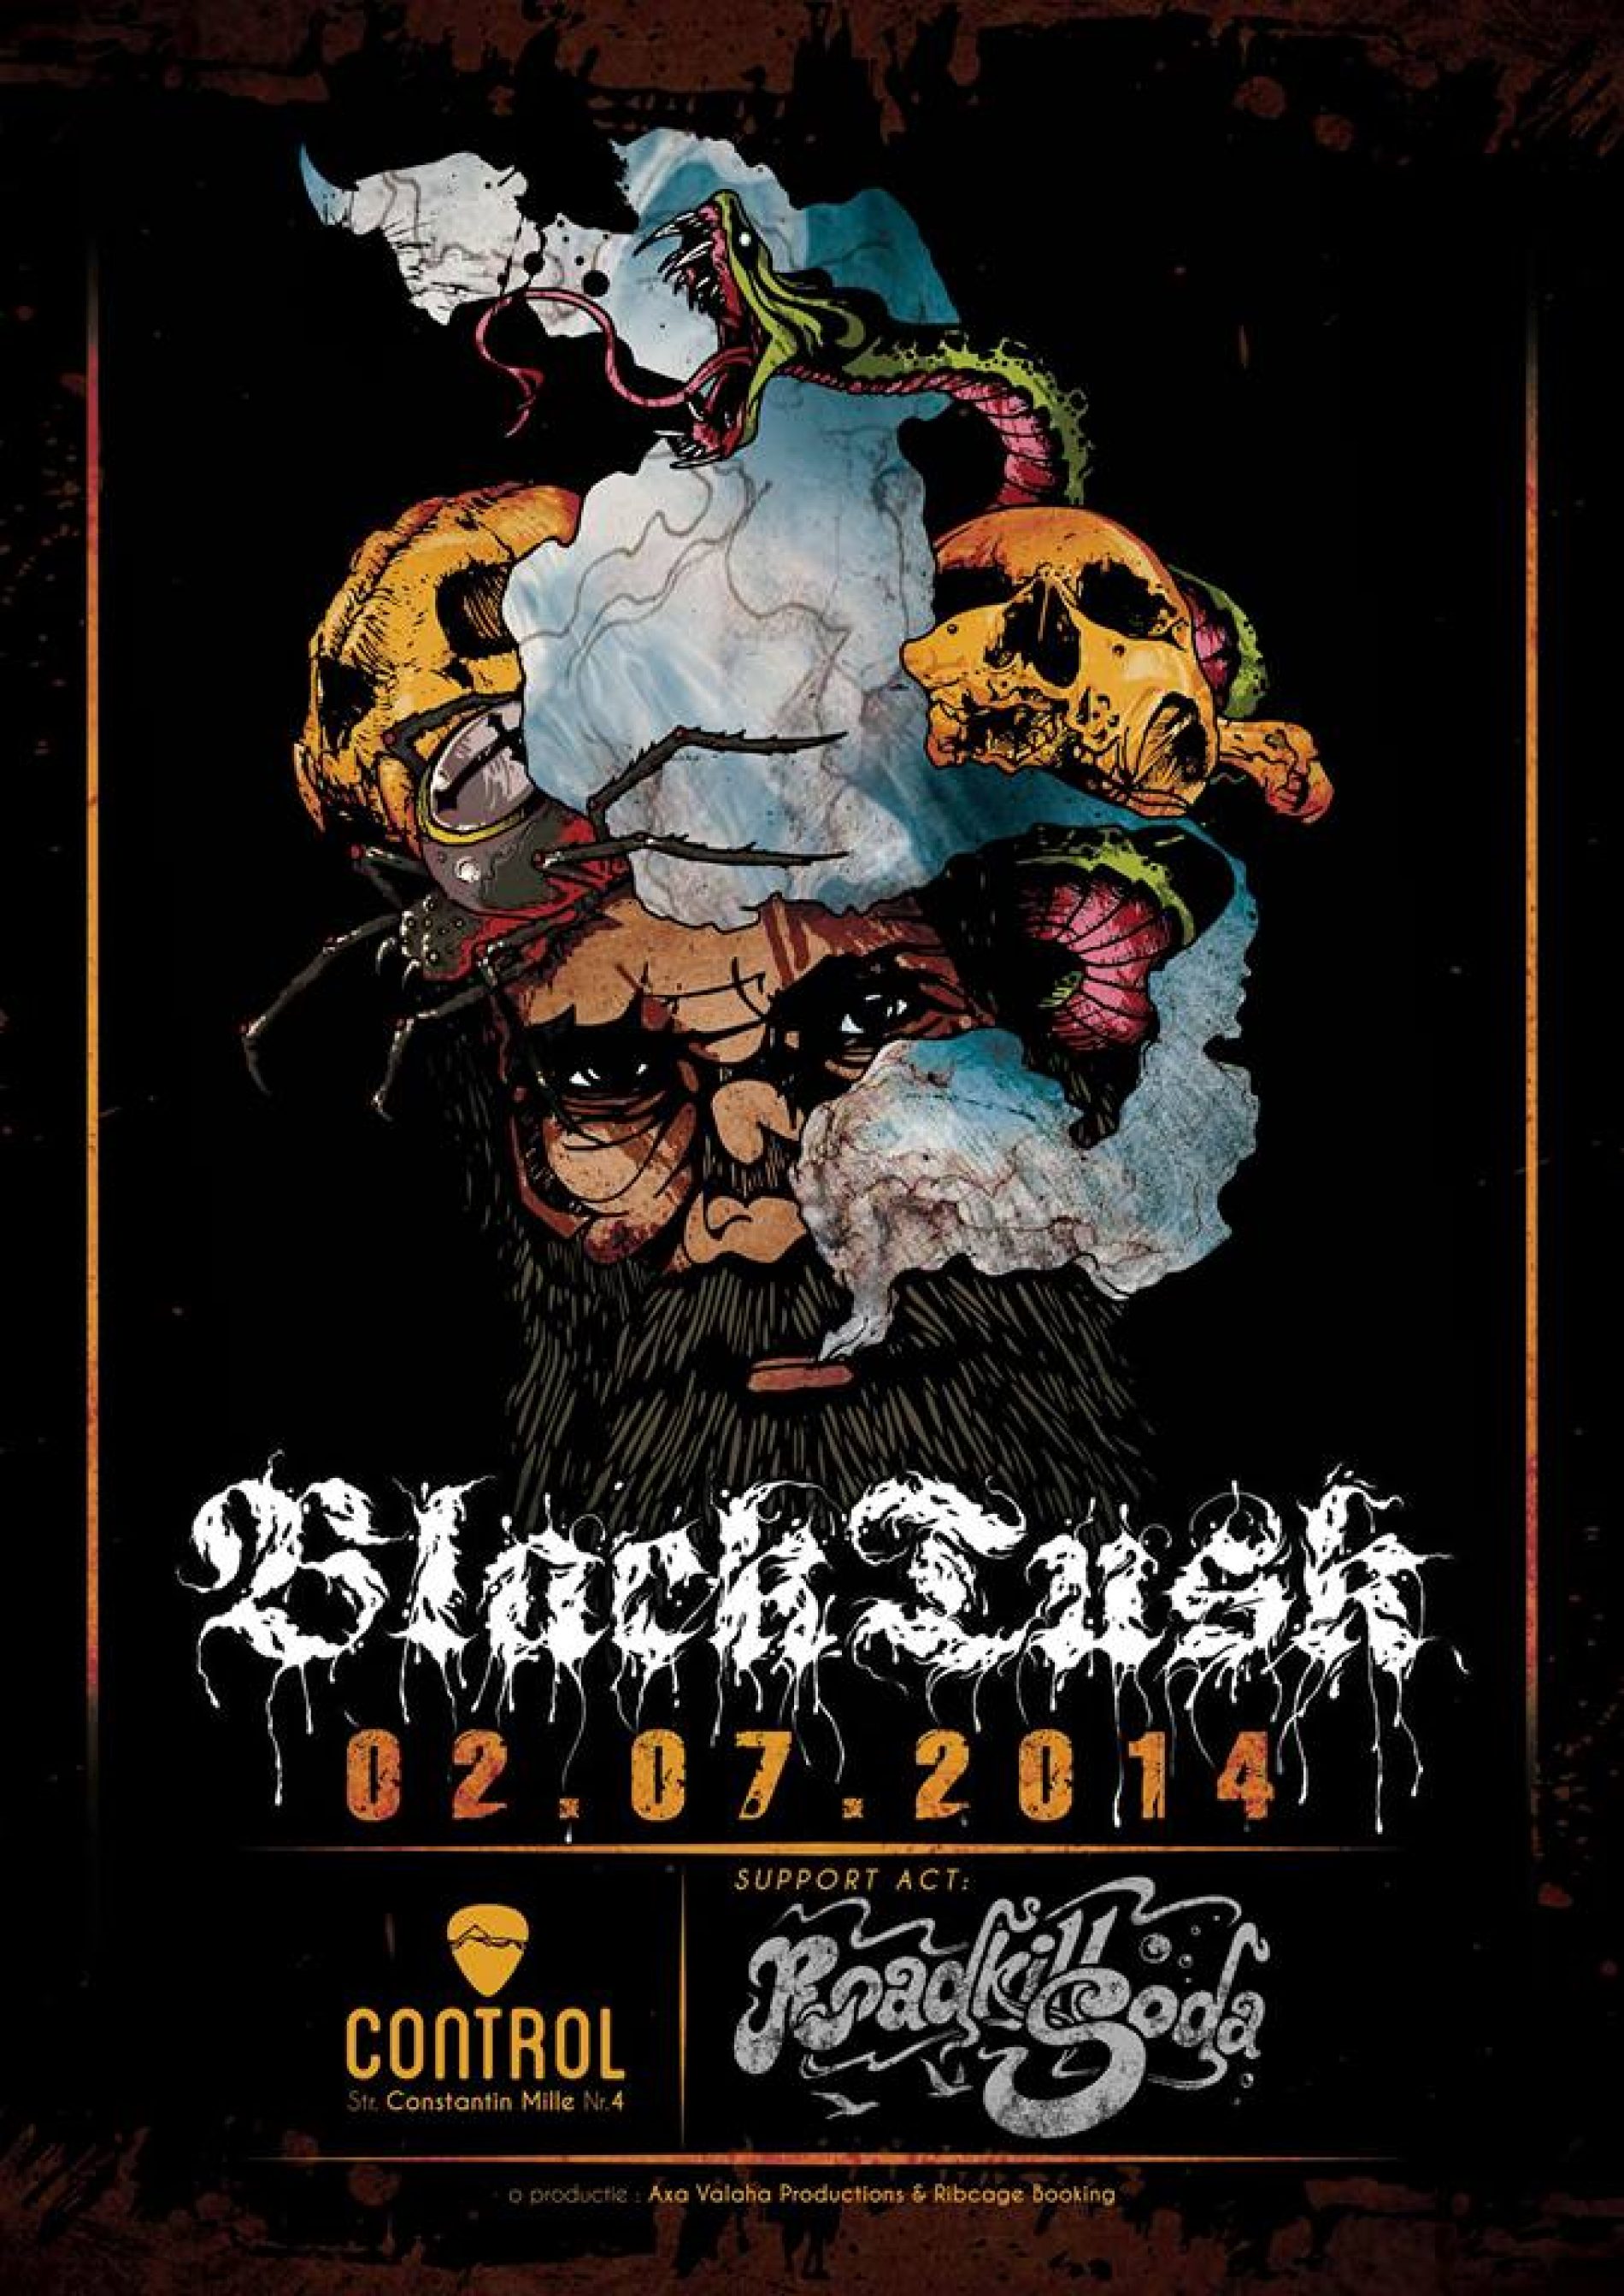 Concert Black Tusk si Roadkill Soda in club Control